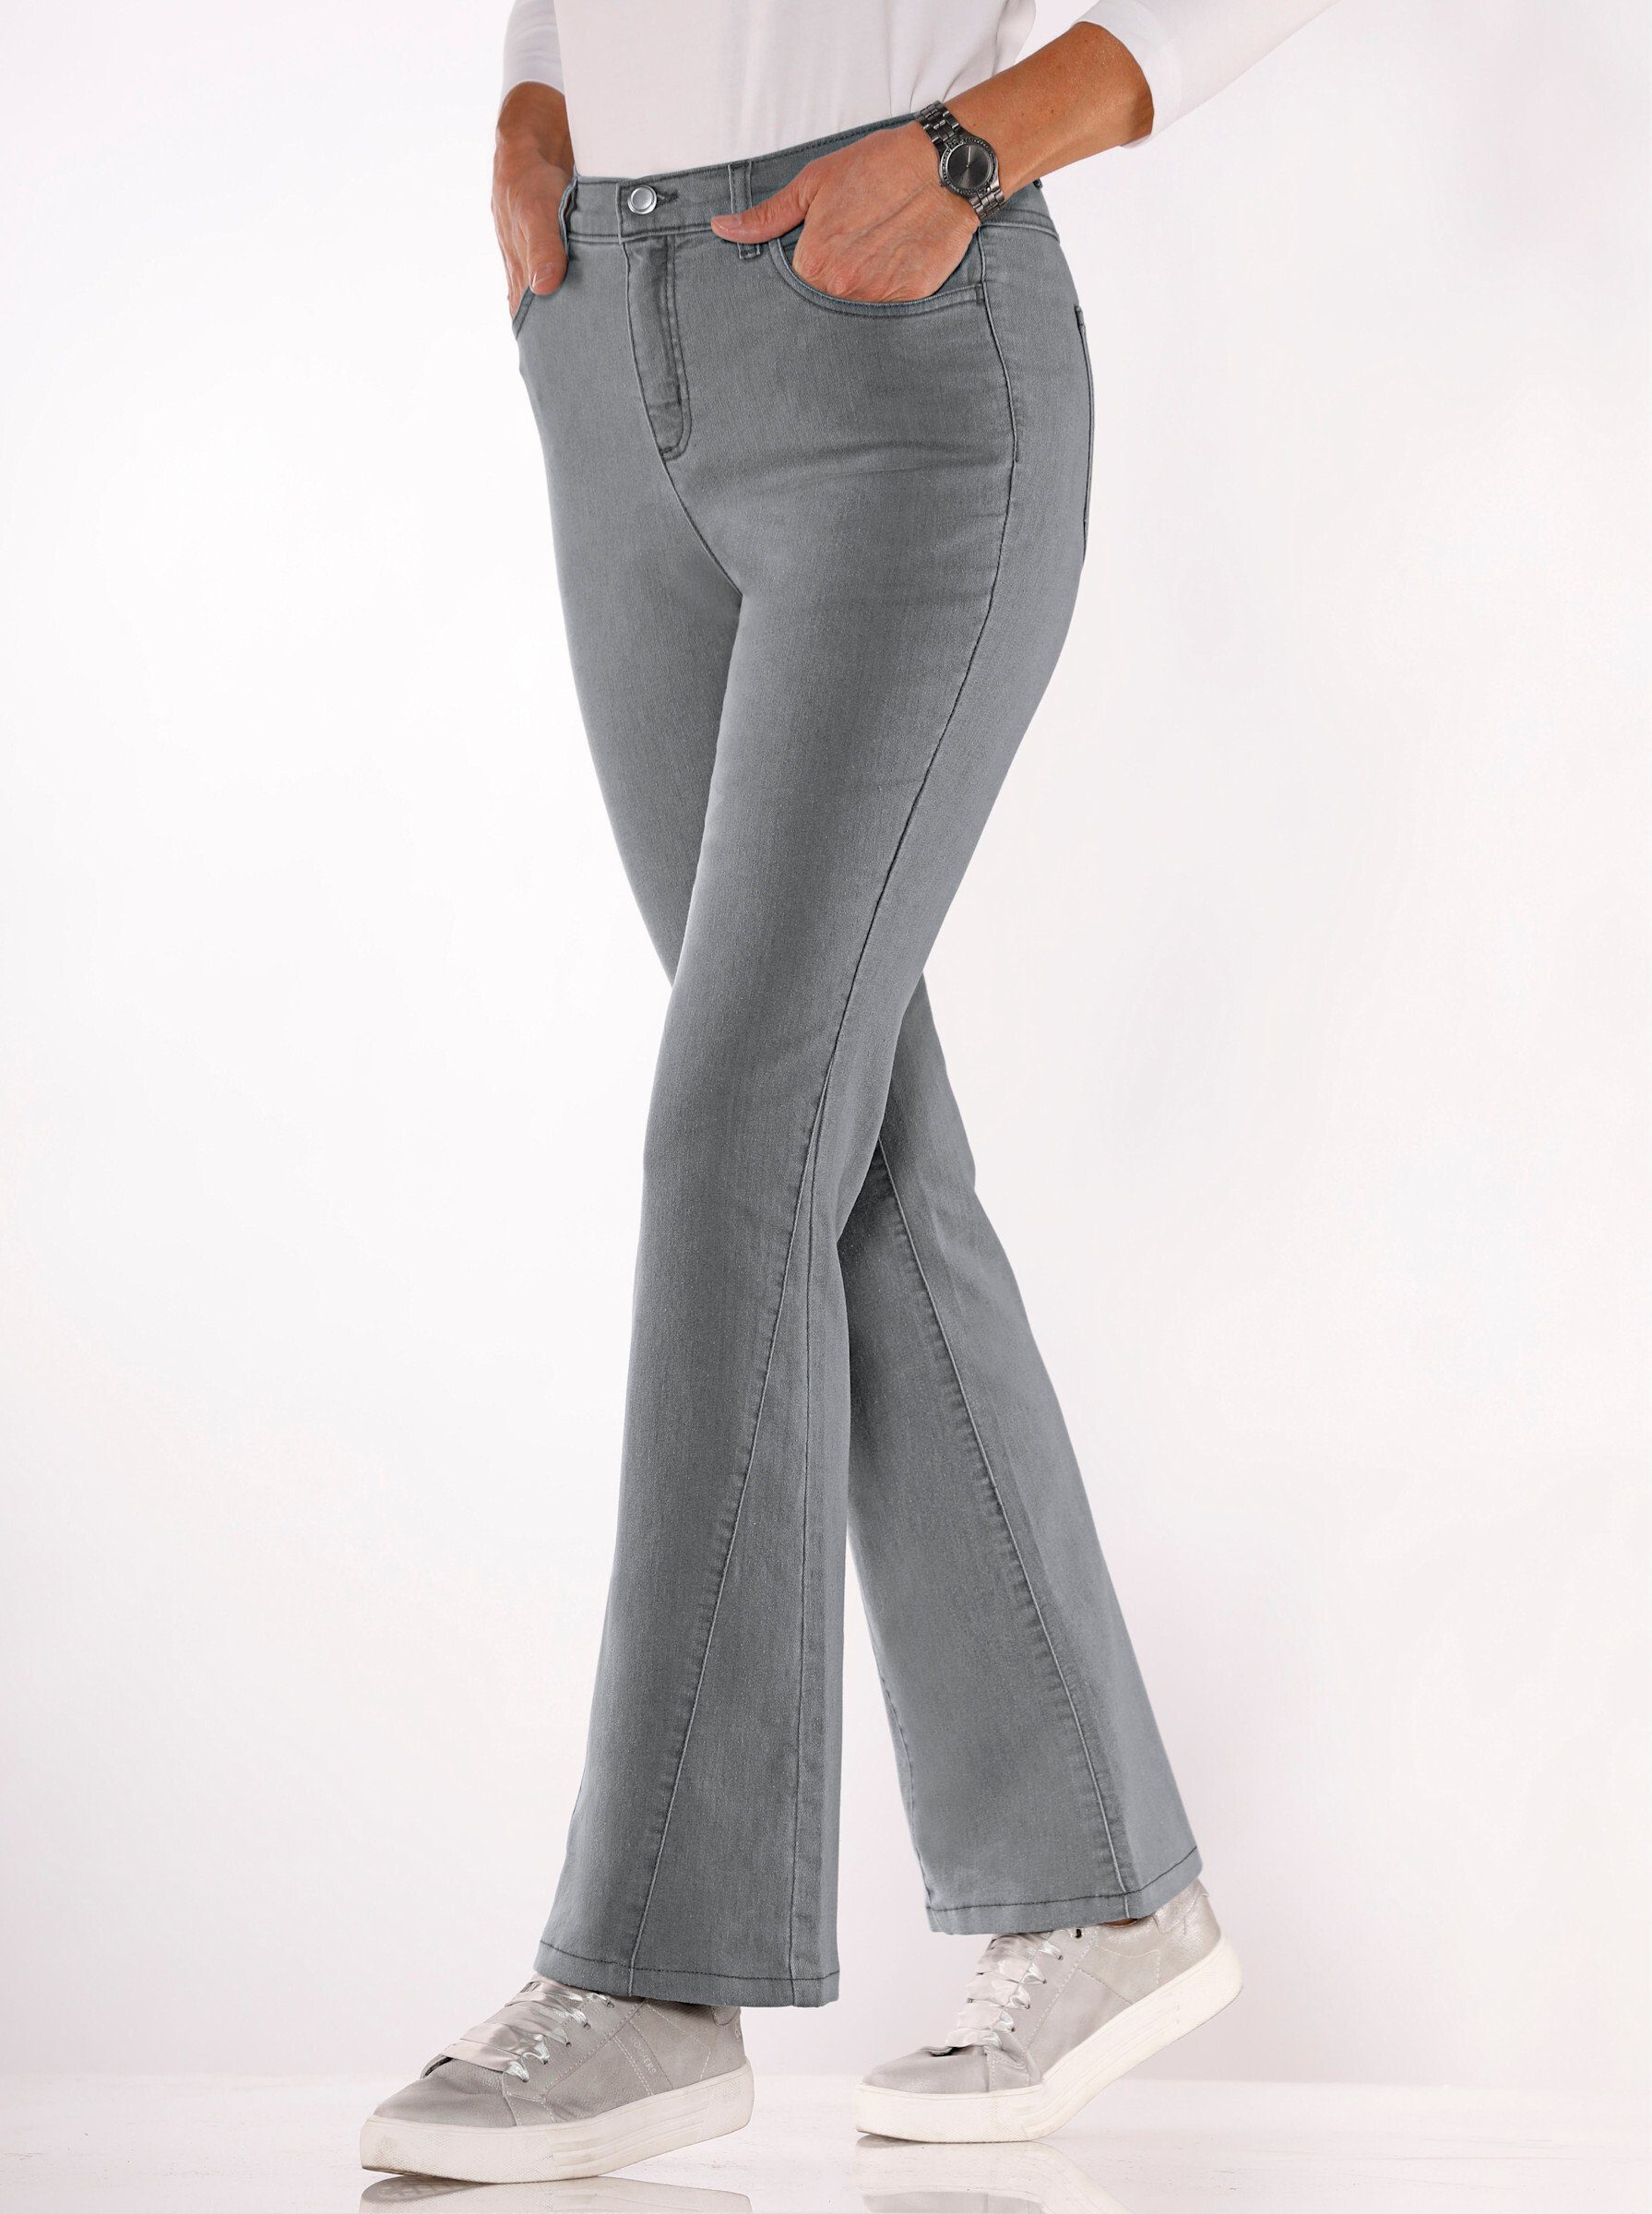 grey-denim an! Sieh Jeans Bequeme light